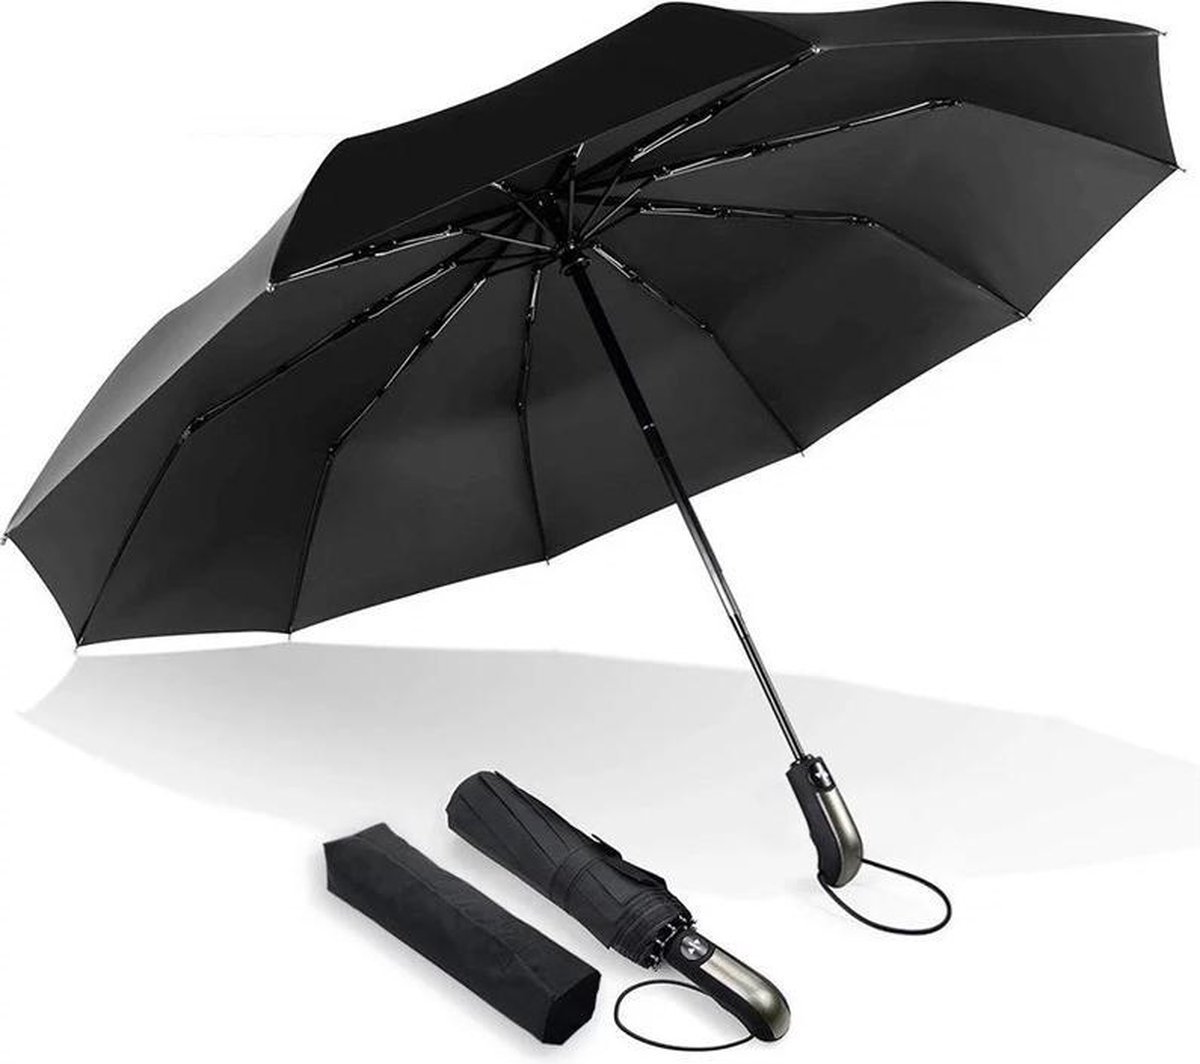 Paraplu - Stormparaplu - Automatisch uitklapbaar - Opvouwbaar - 110 cm XL - Open en dicht knop - Stormbestendig tot 140km p/u - Incl. Beschermhoes - Zwart - Virelo